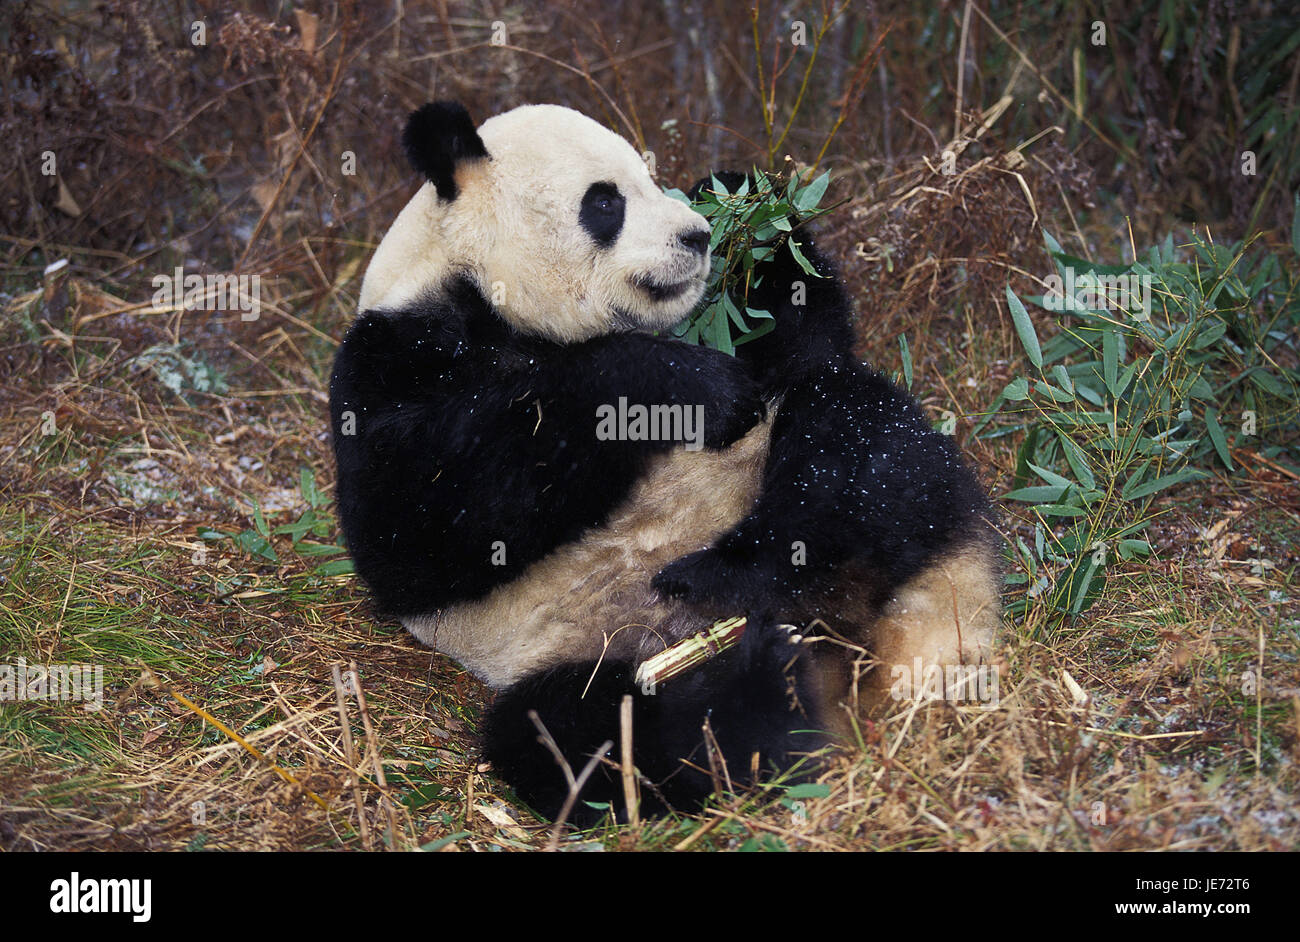 Big panda, Ailuropoda melanoleuca, adult animal, eat, bamboo, Wolong reserve, China, Stock Photo